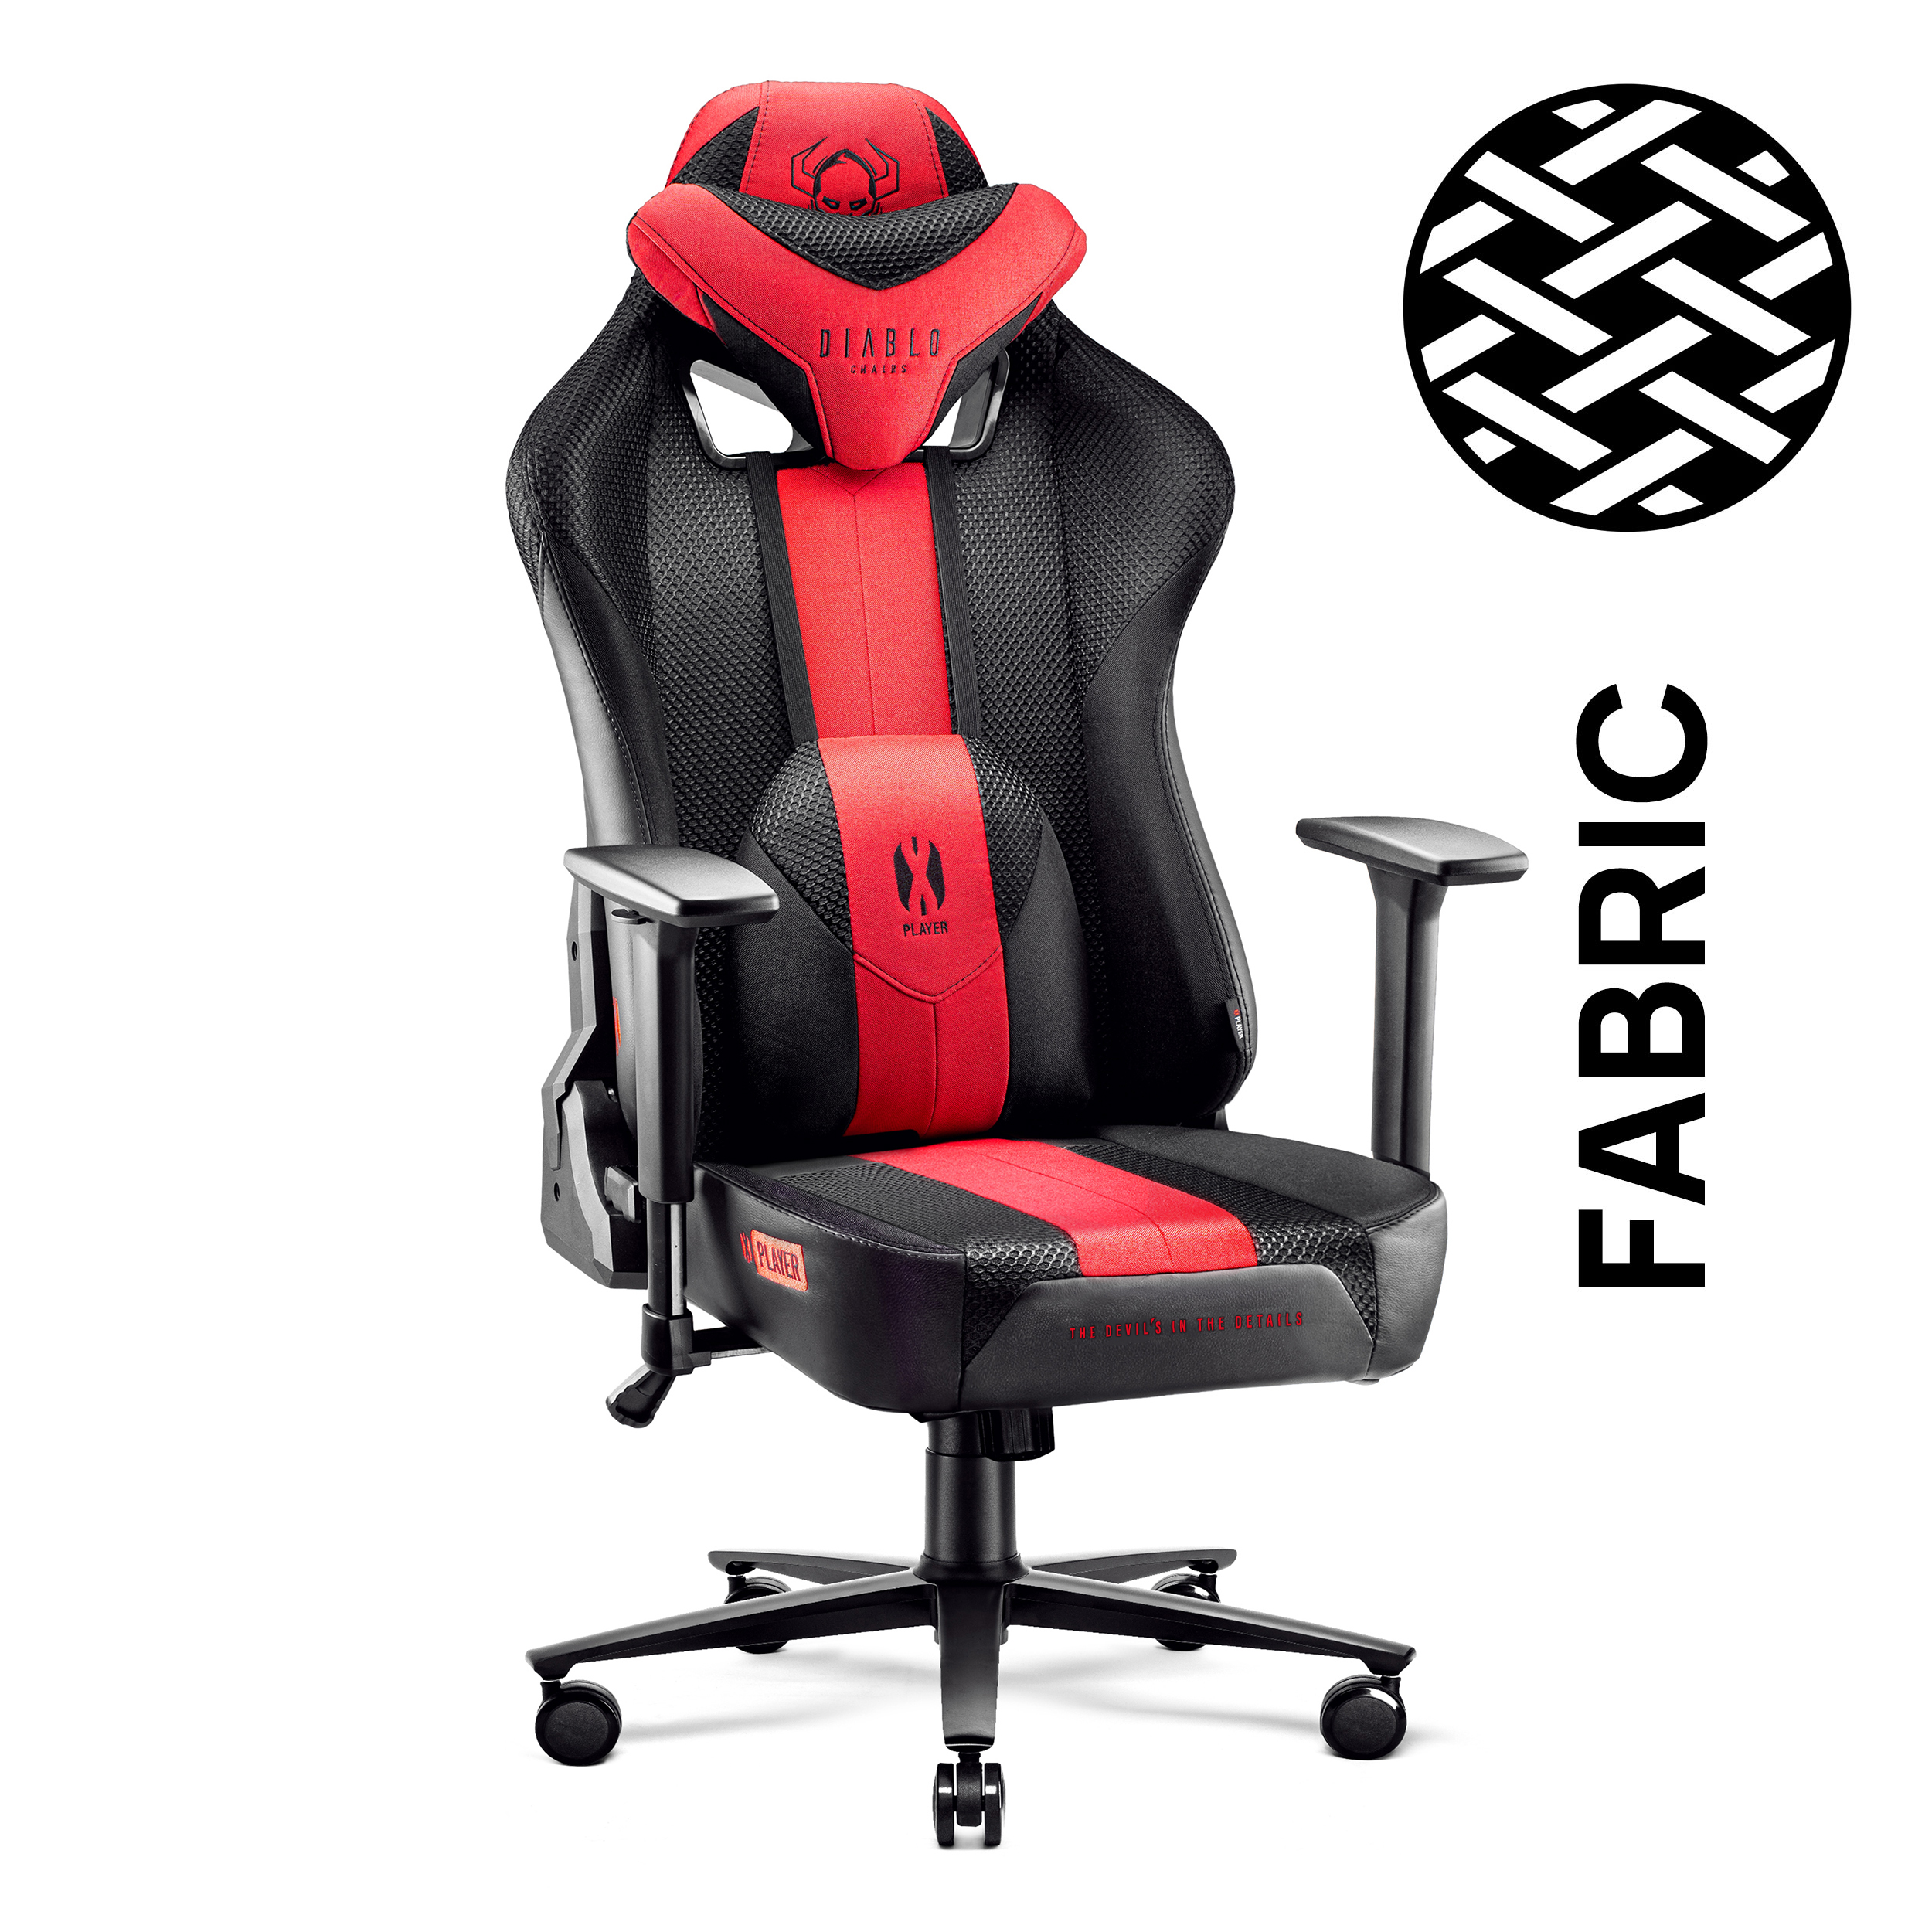 2.0 STUHL DIABLO GAMING CHAIRS Gaming Chair, black/red X-PLAYER KING